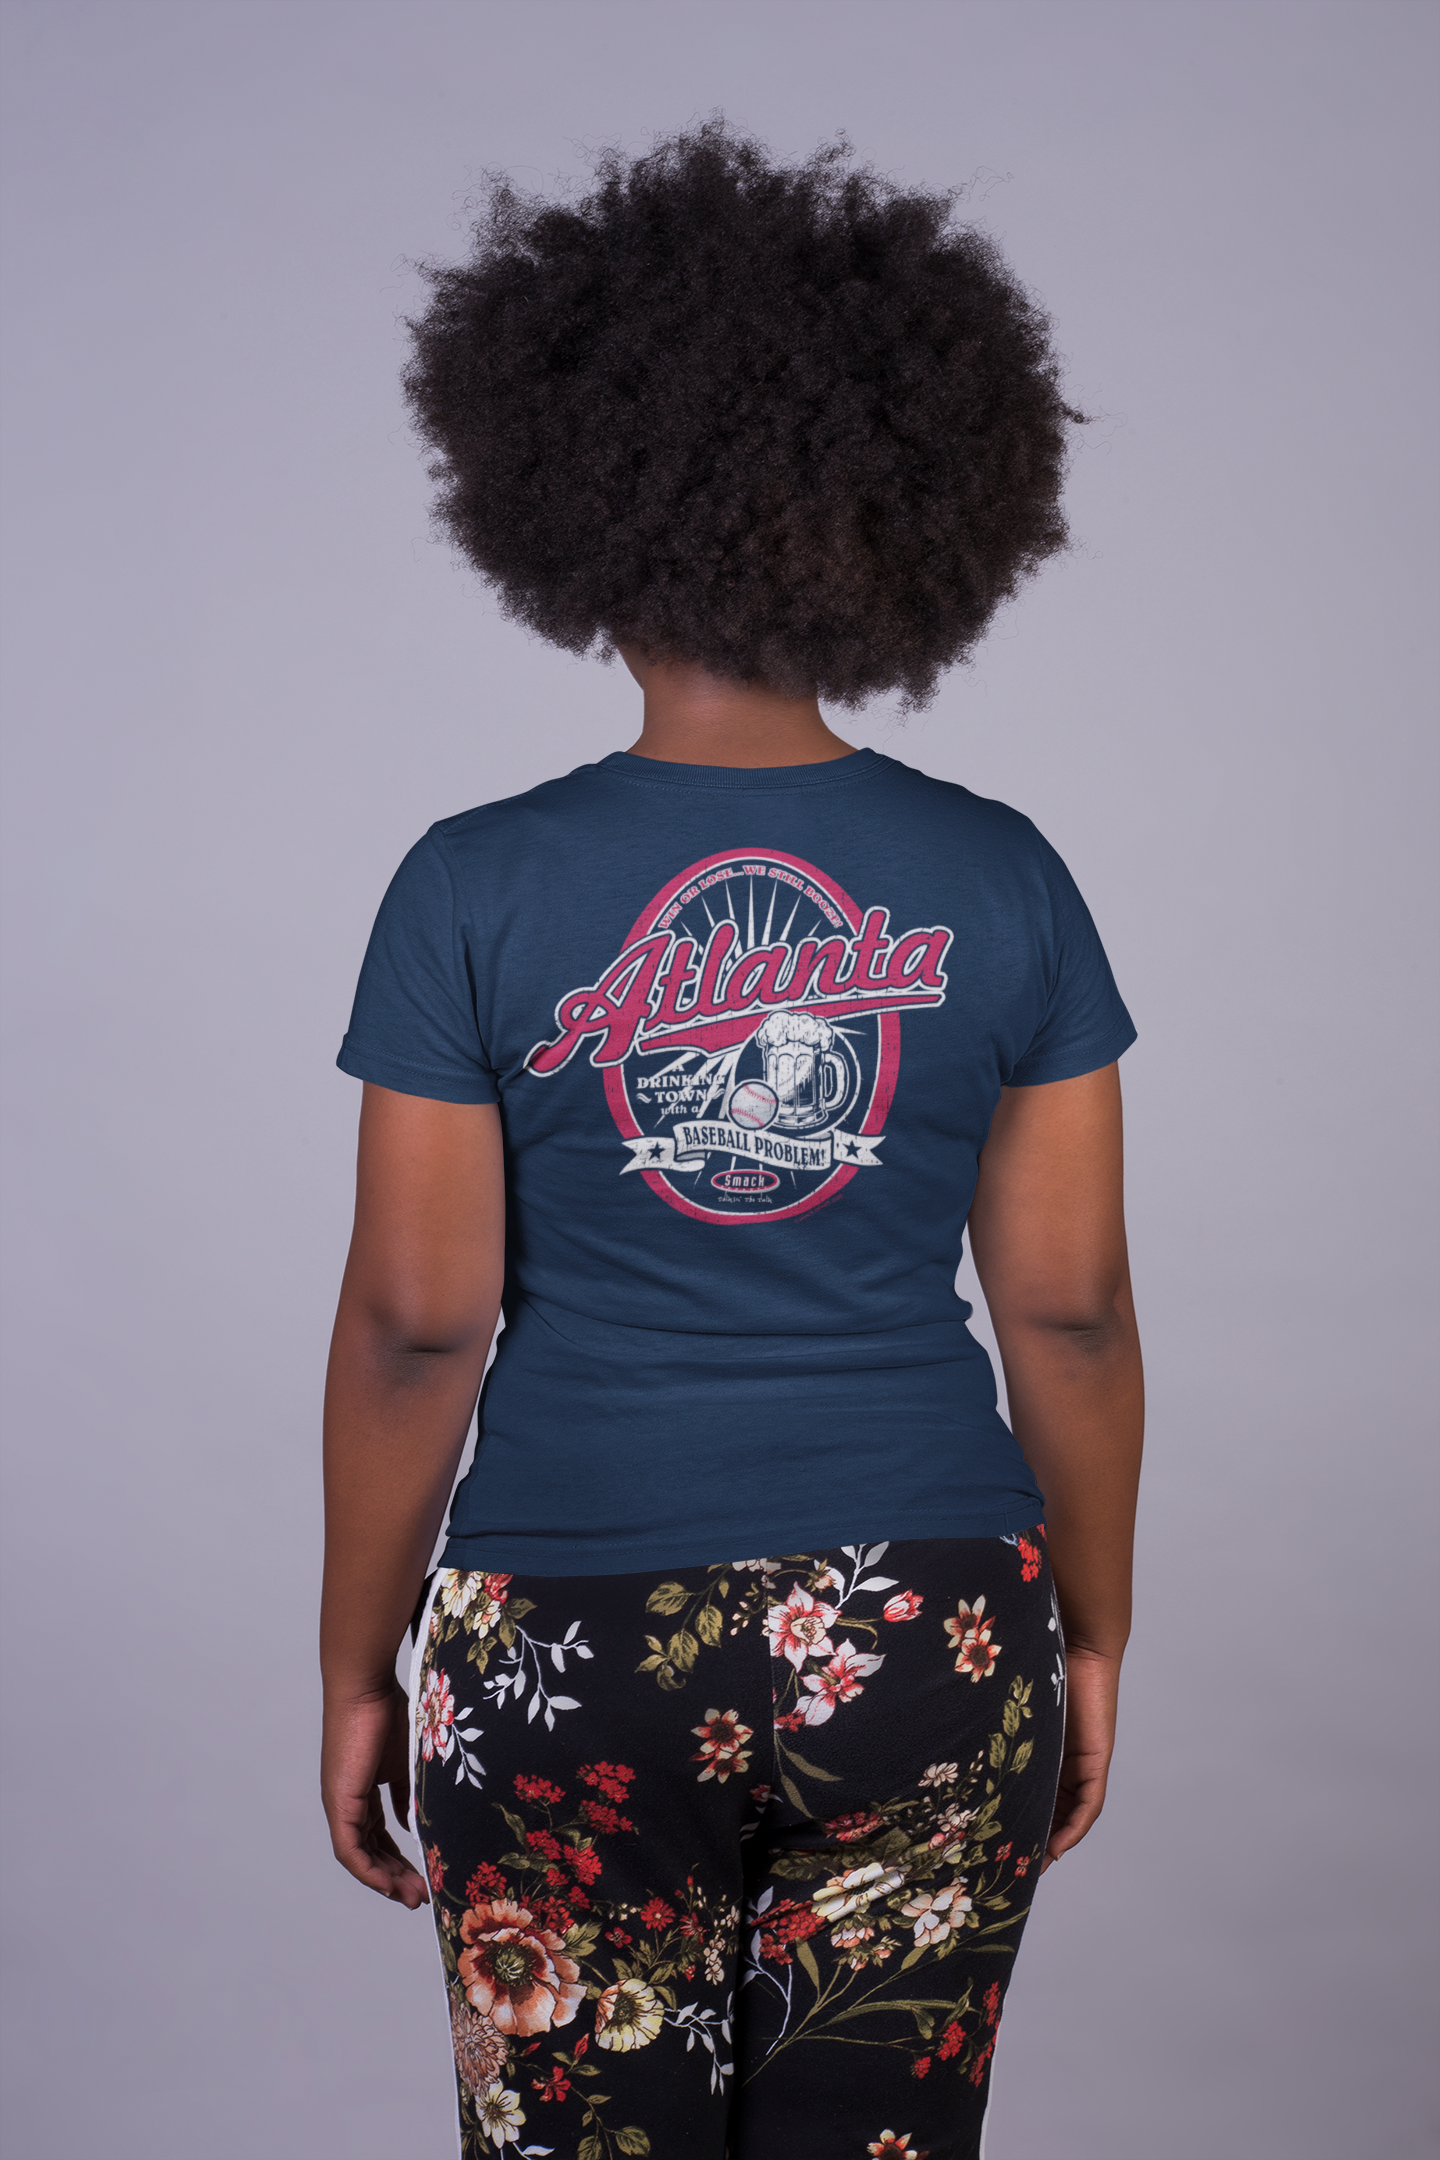 Smack Apparel Atlanta Baseball Fans | A Drinking Town with A Baseball Problem Shirt, 3XL / Short Sleeve / Navy